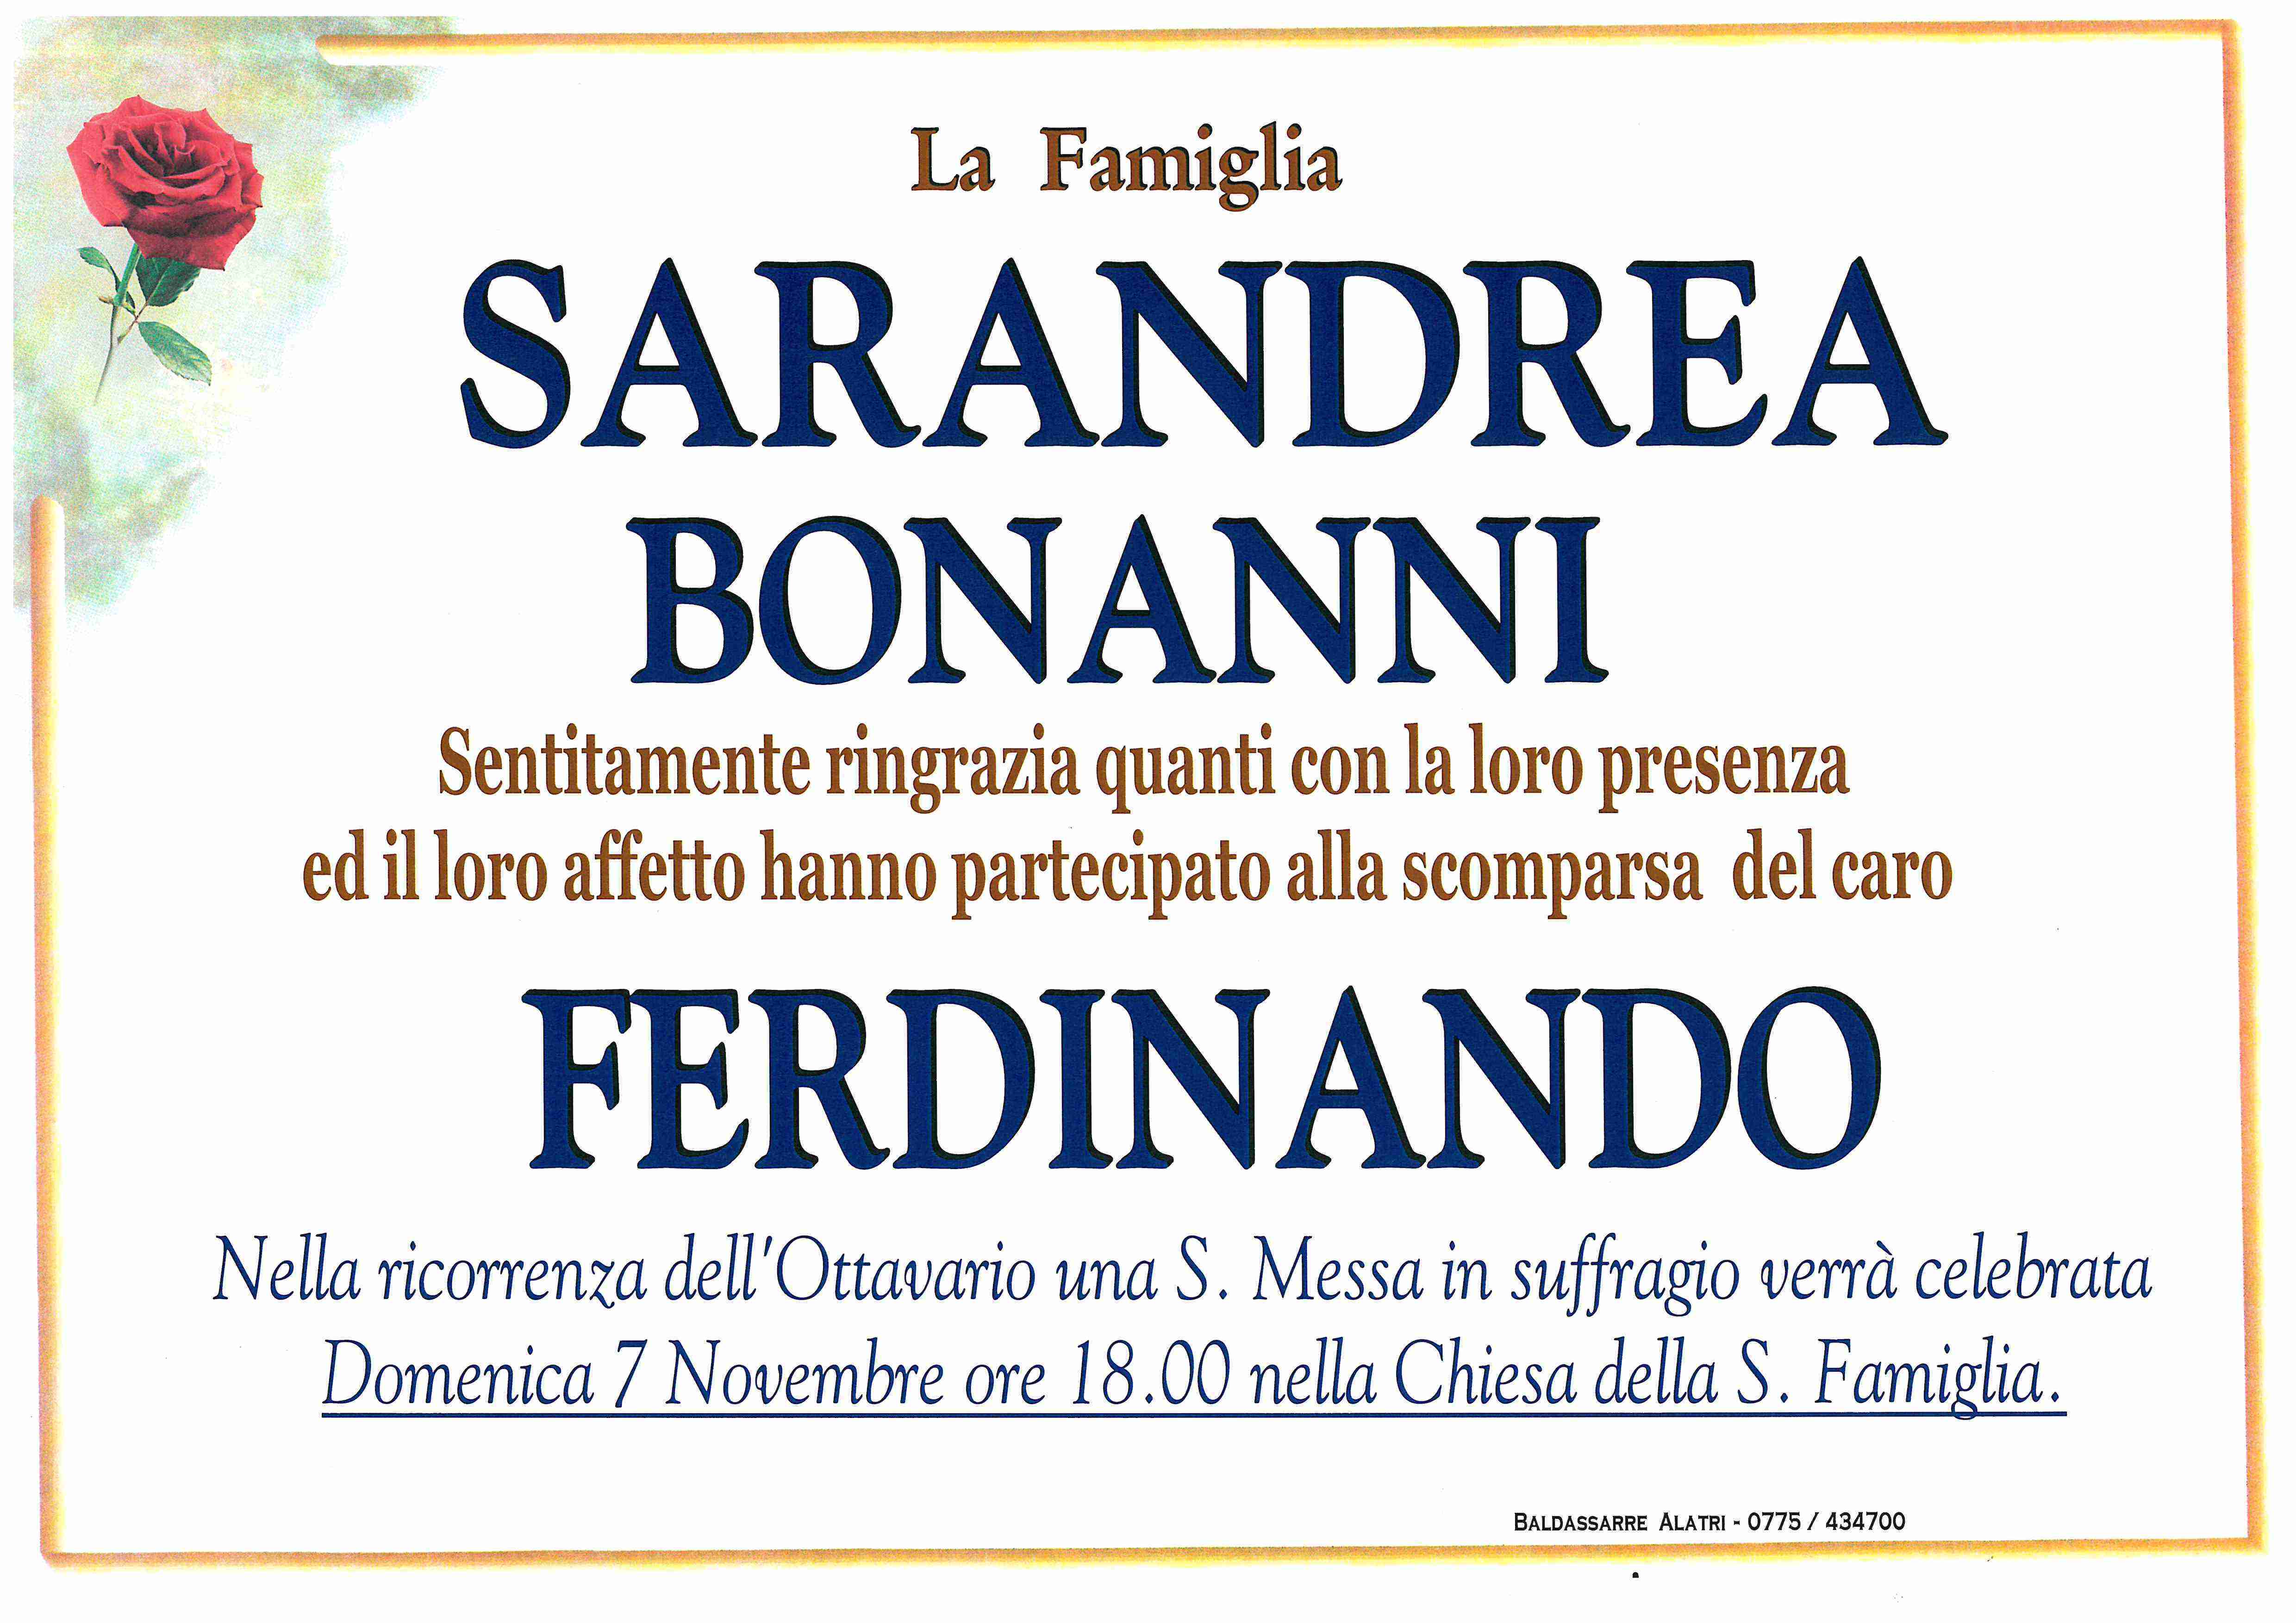 Ferdinando Sarandrea